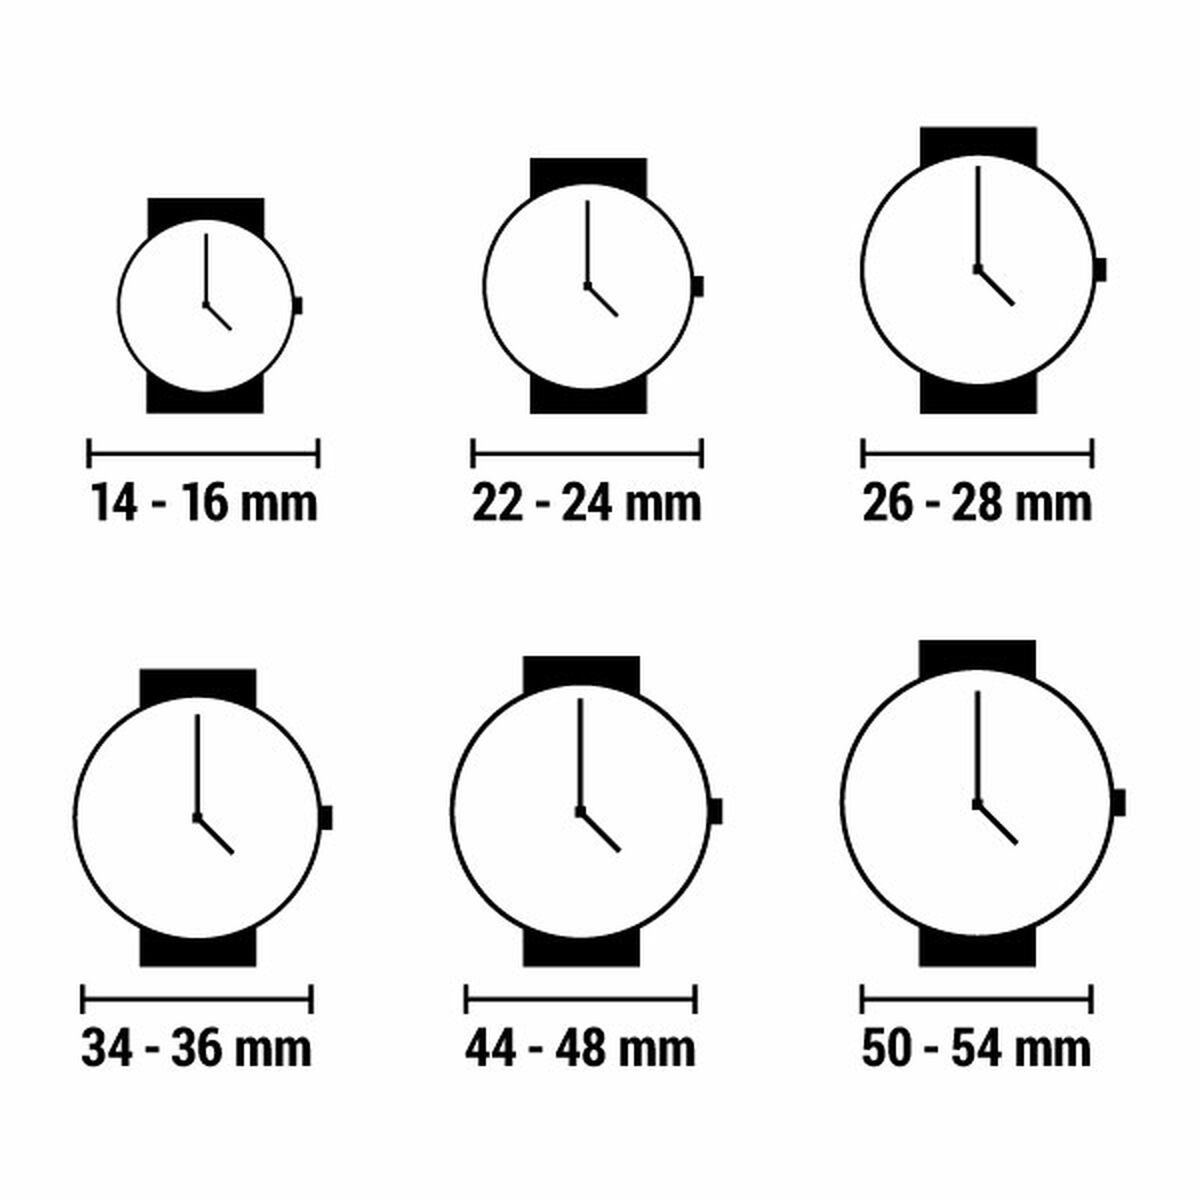 Horloge Dames Swatch SYXS118